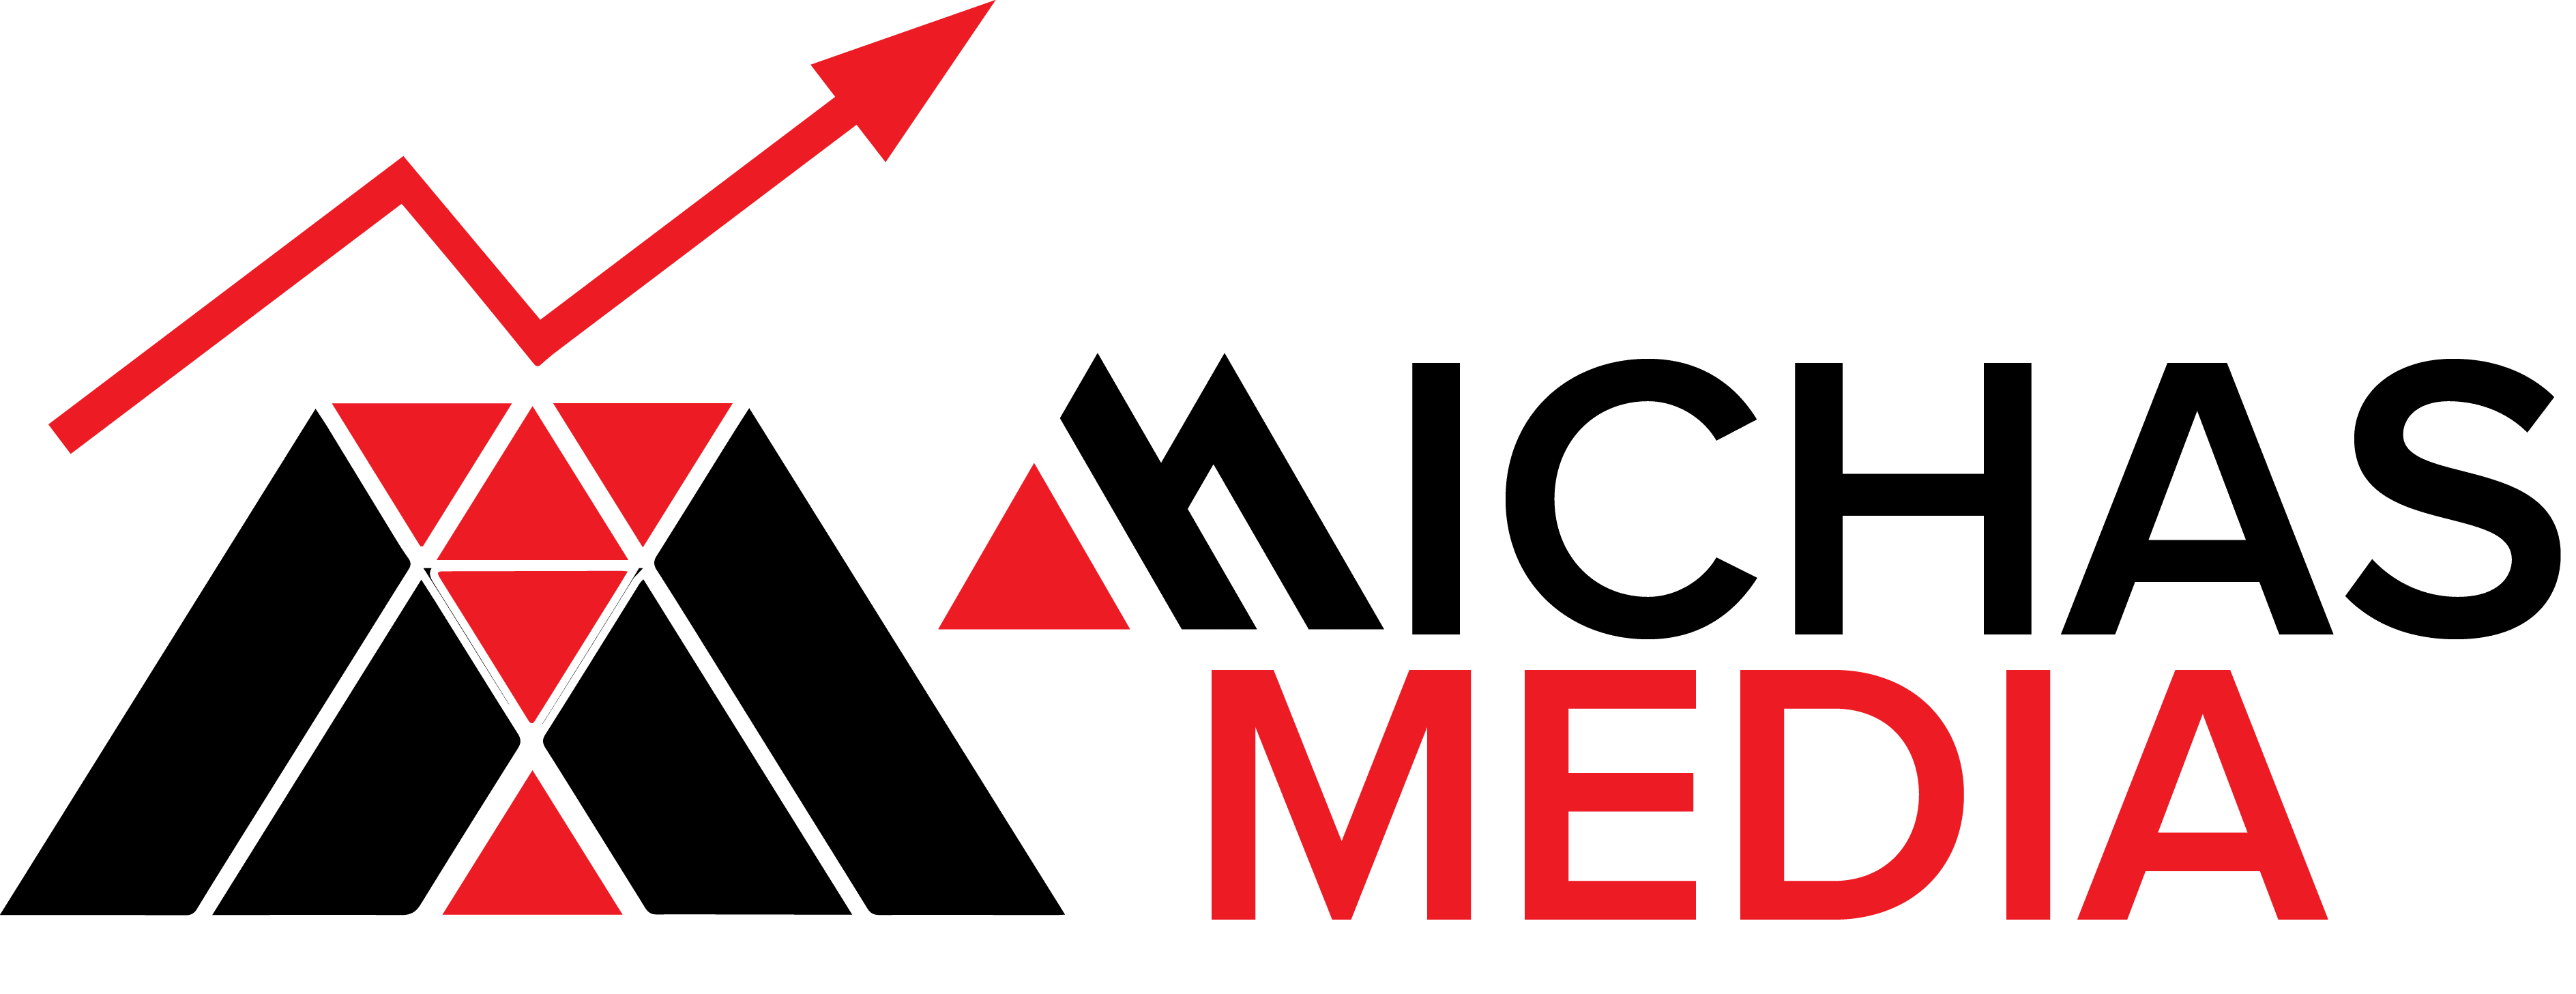 Michas Media